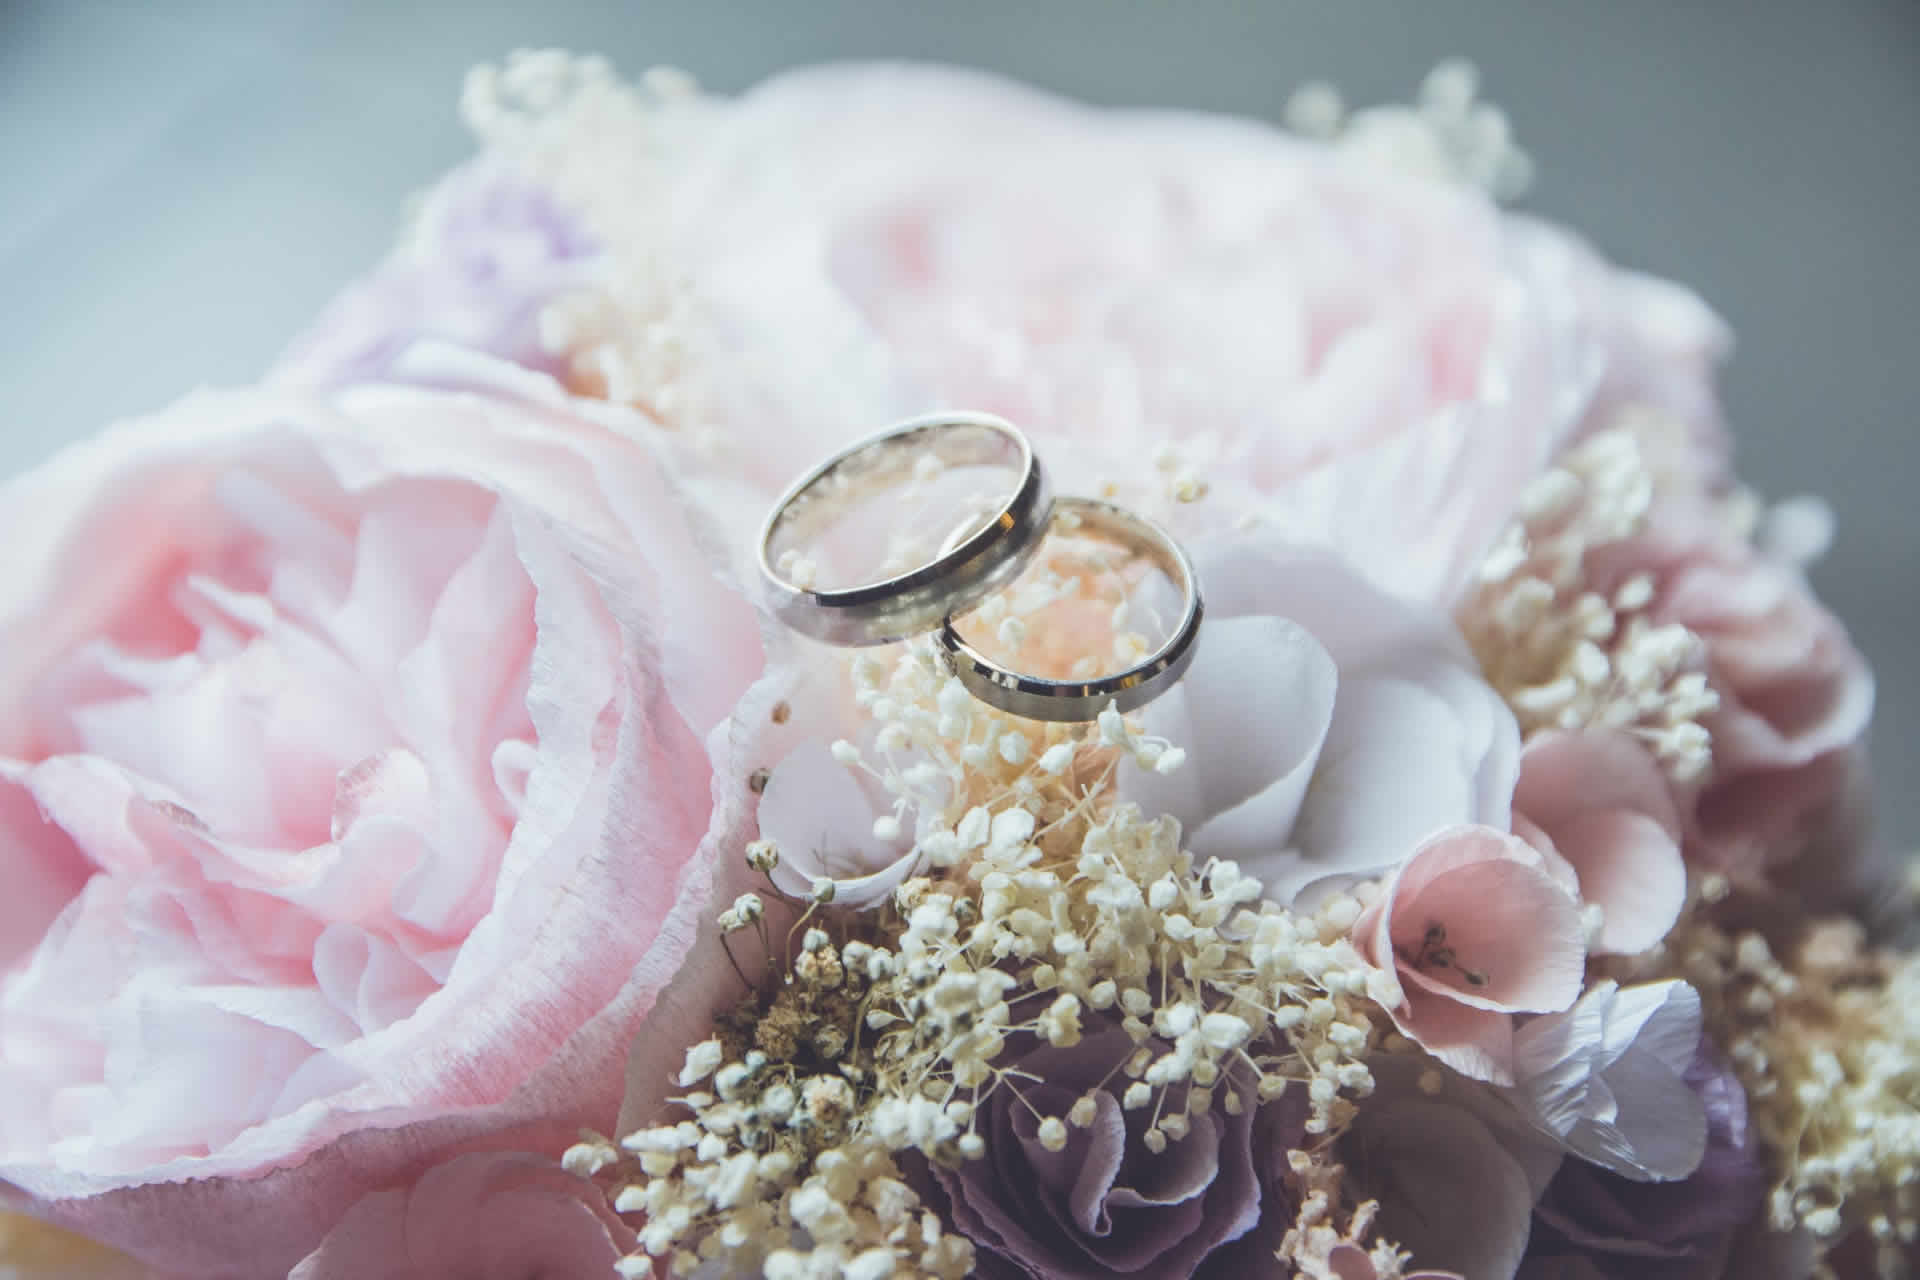 Wedding flowers and rings - Shane Black Magician - Wedding Blog